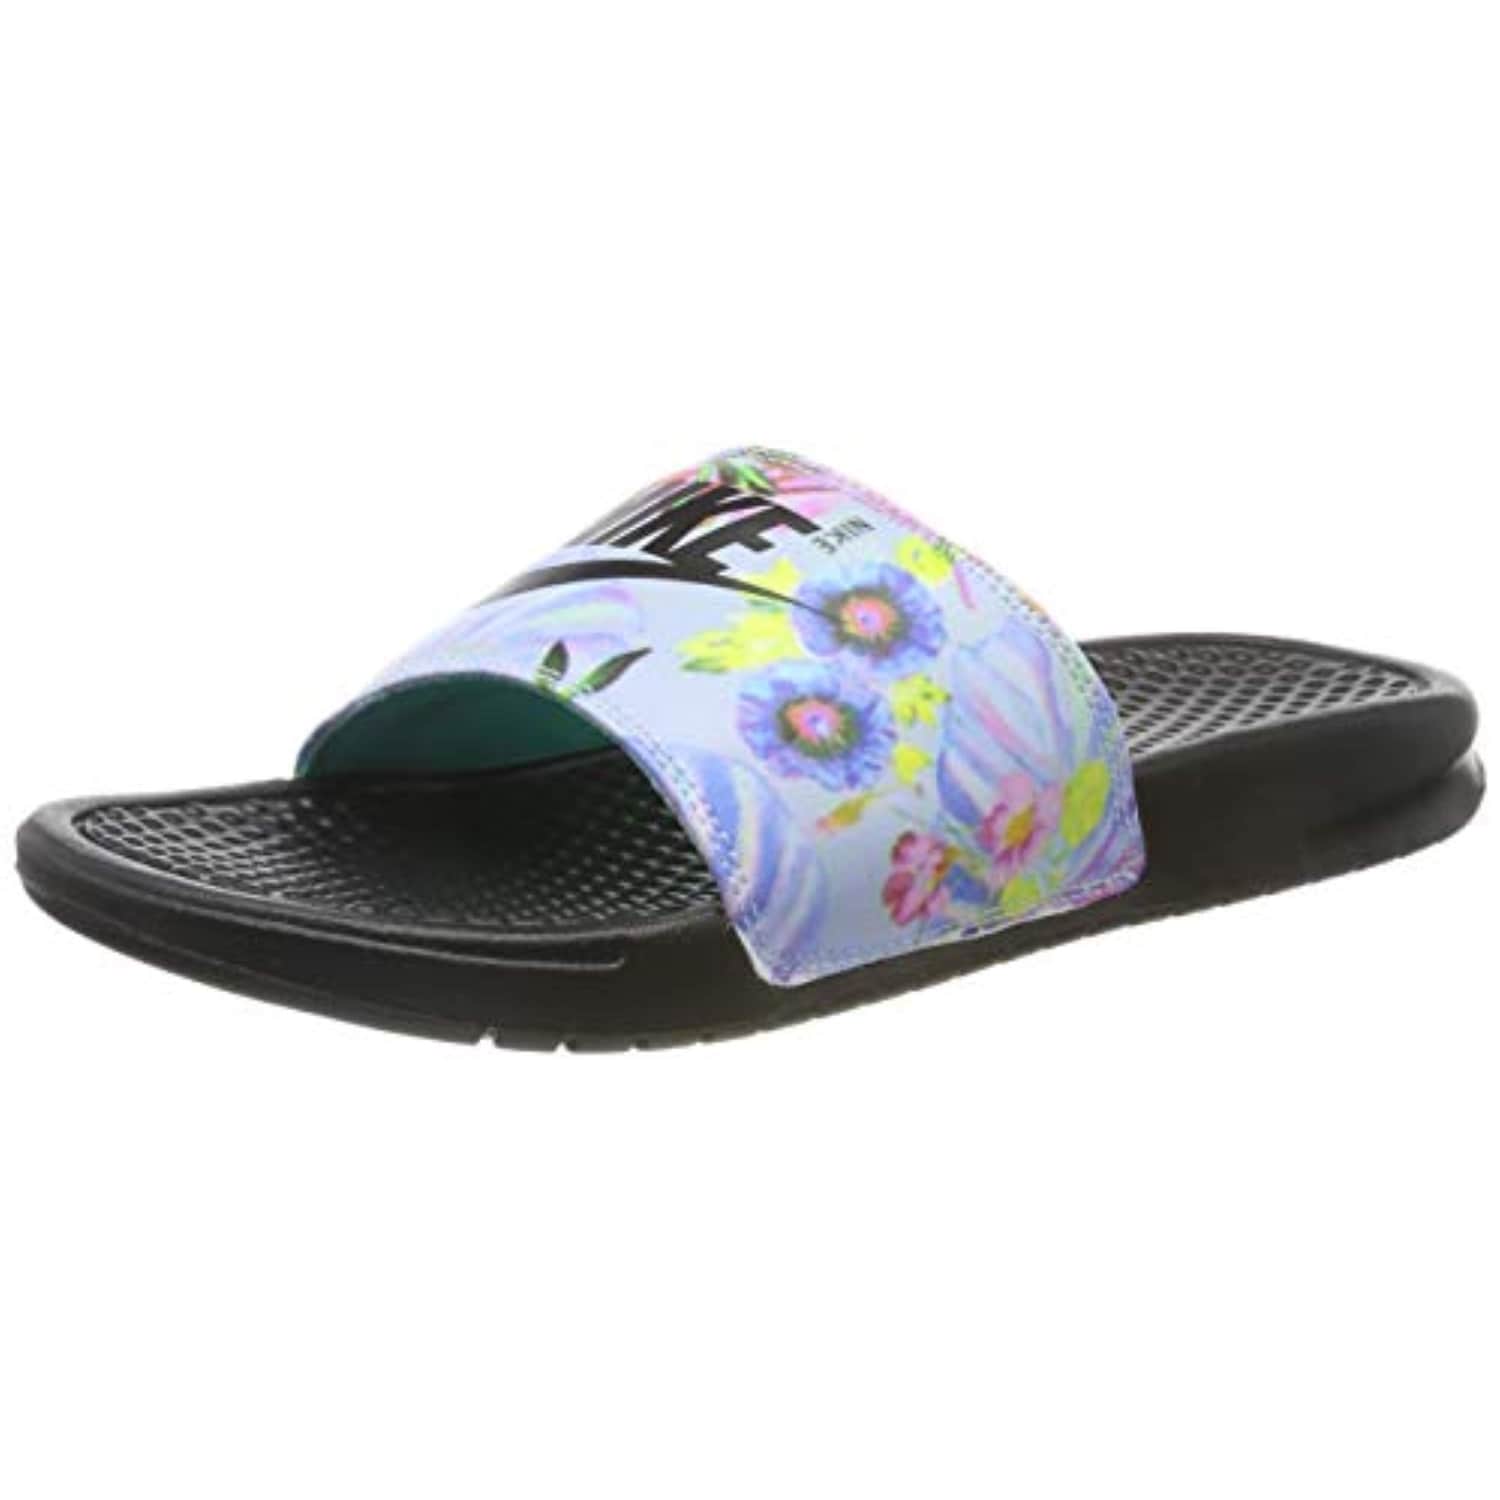 nike women's slide sandals size 8